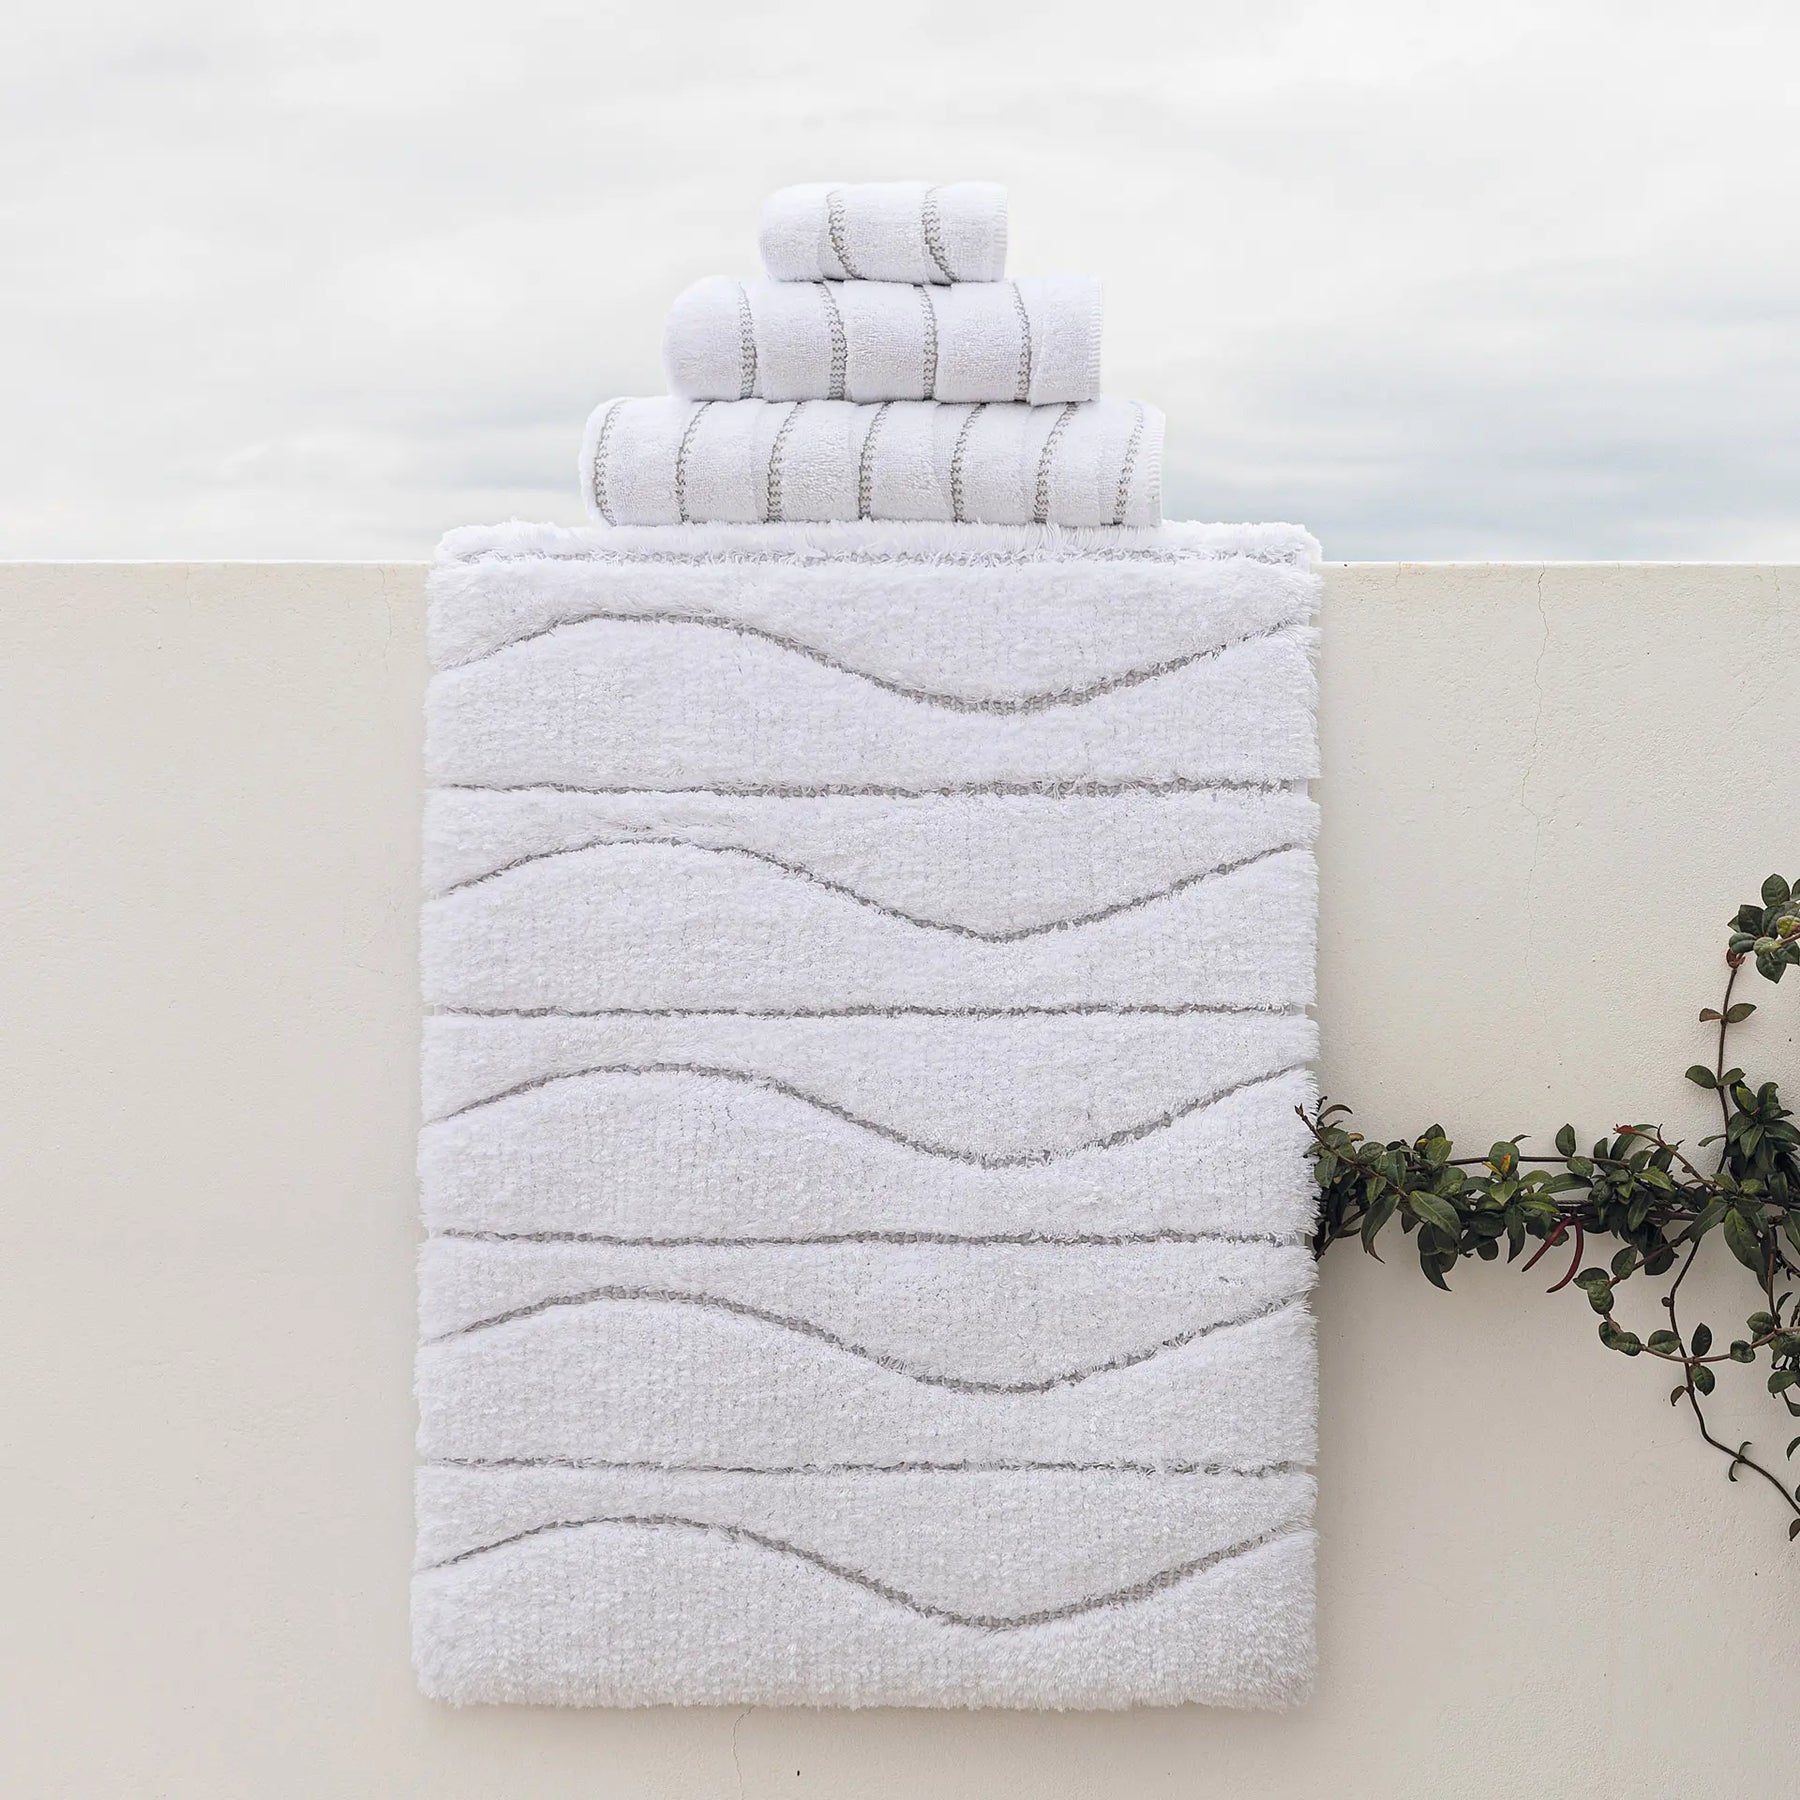 Graccioza Opera Bath Rug and Towels set outside on a ledge